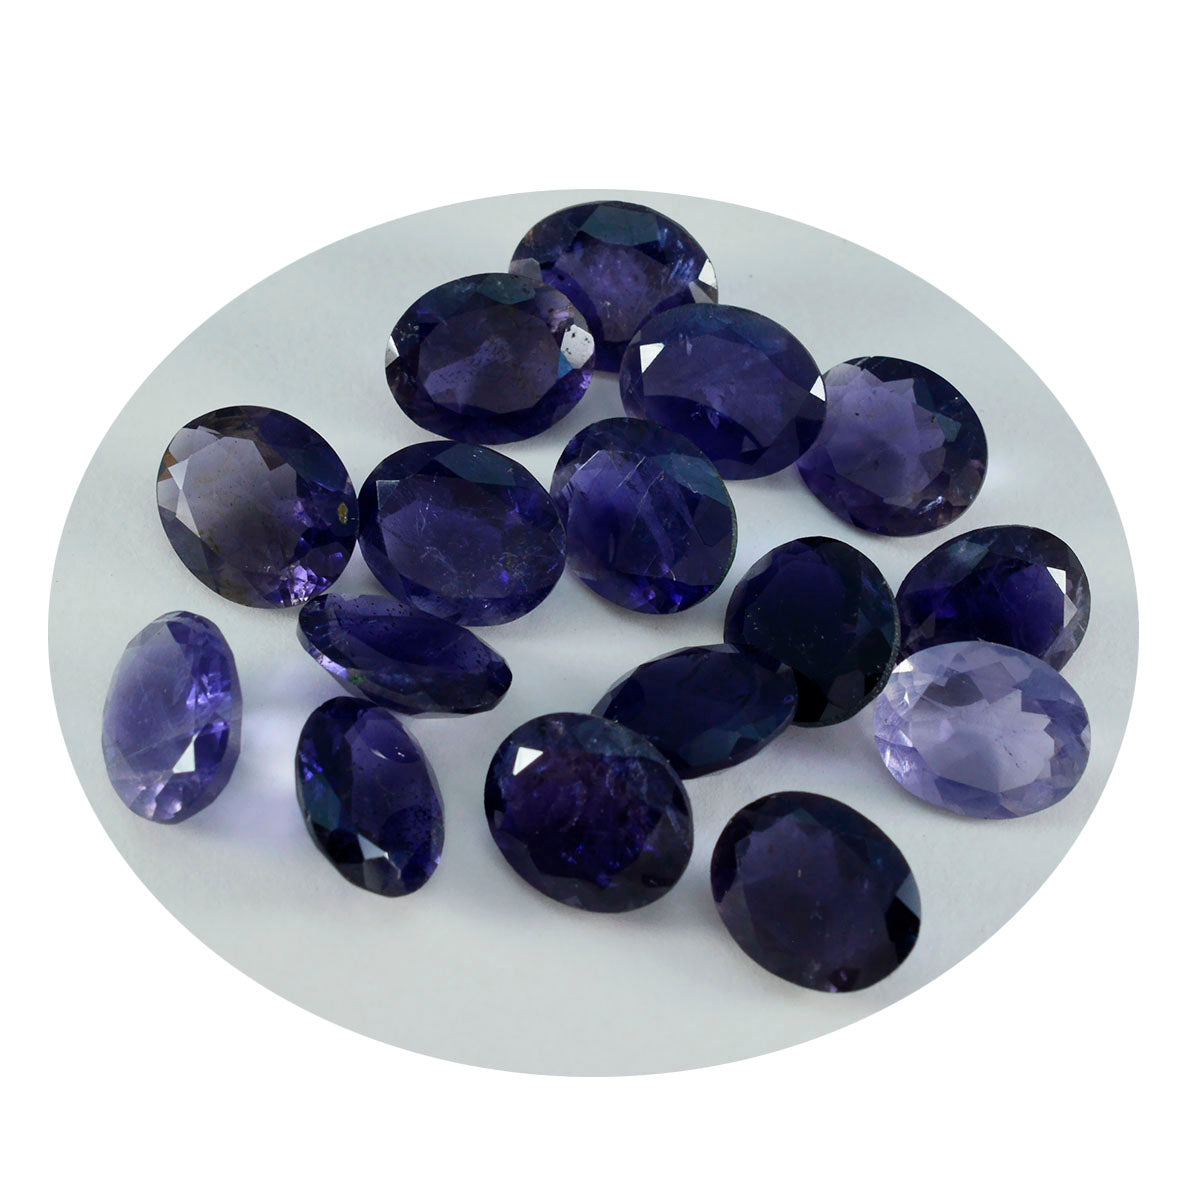 Riyogems 1PC Blue Iolite Faceted 6x8 mm Oval Shape cute Quality Stone